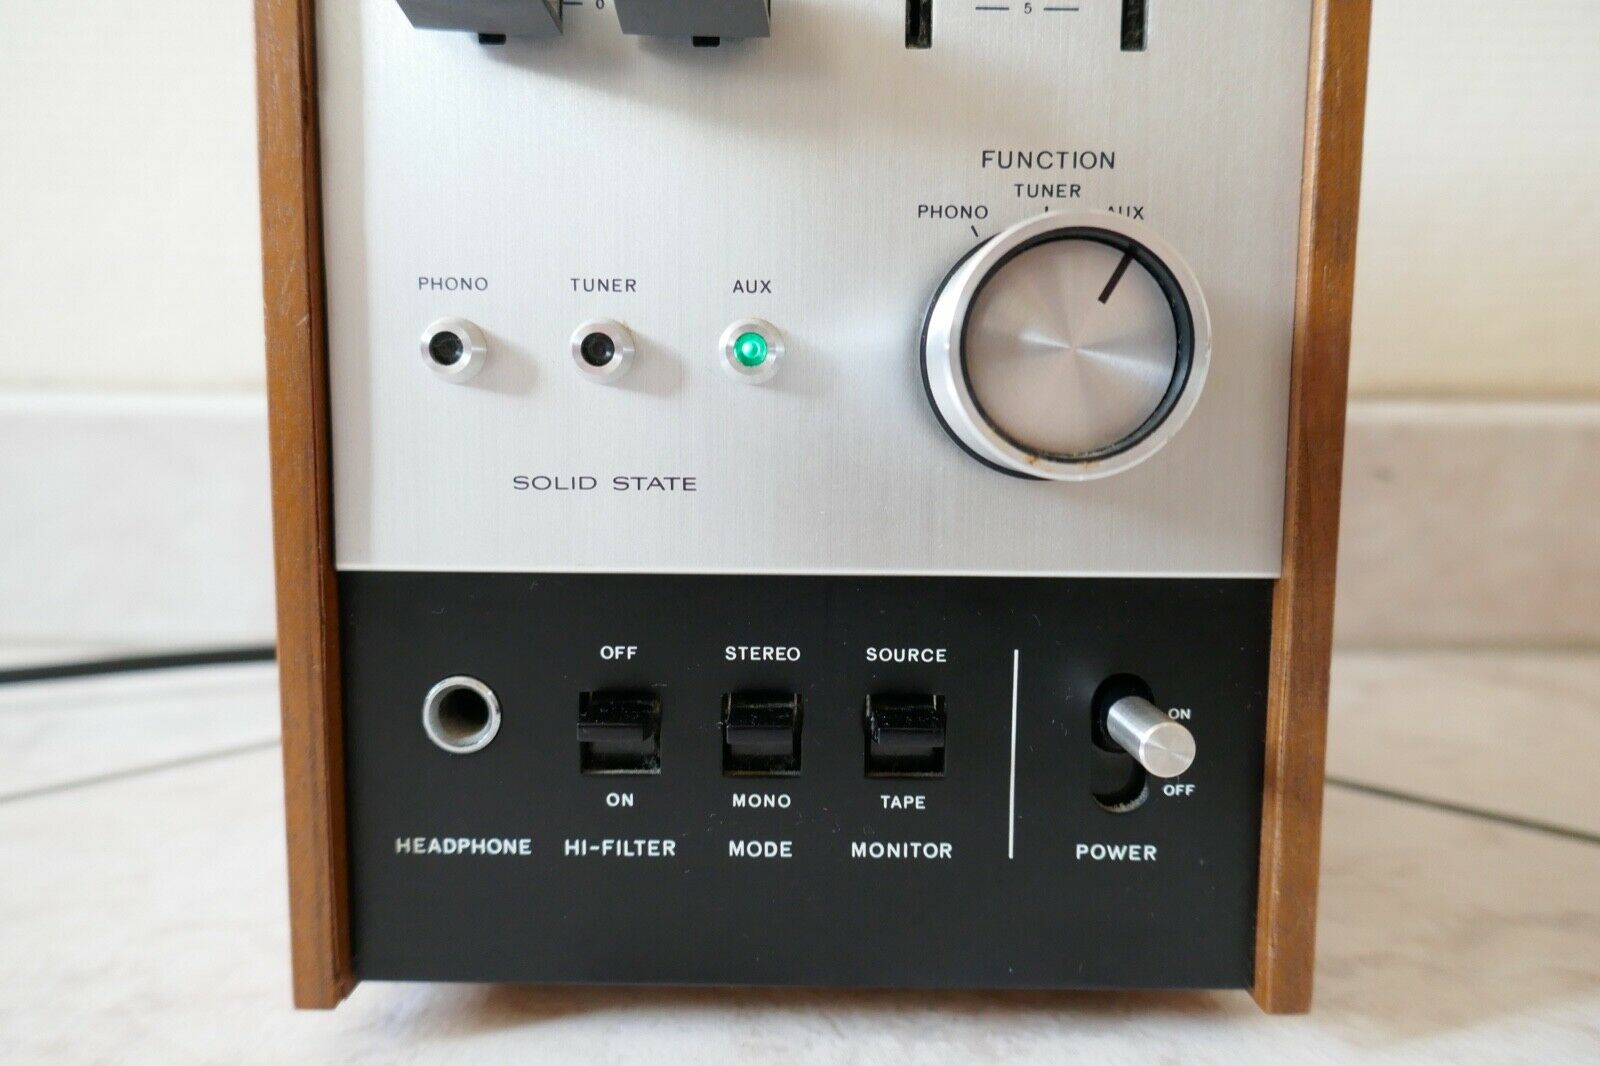 amplifier amplificateur sony TA-88 vintage occasion